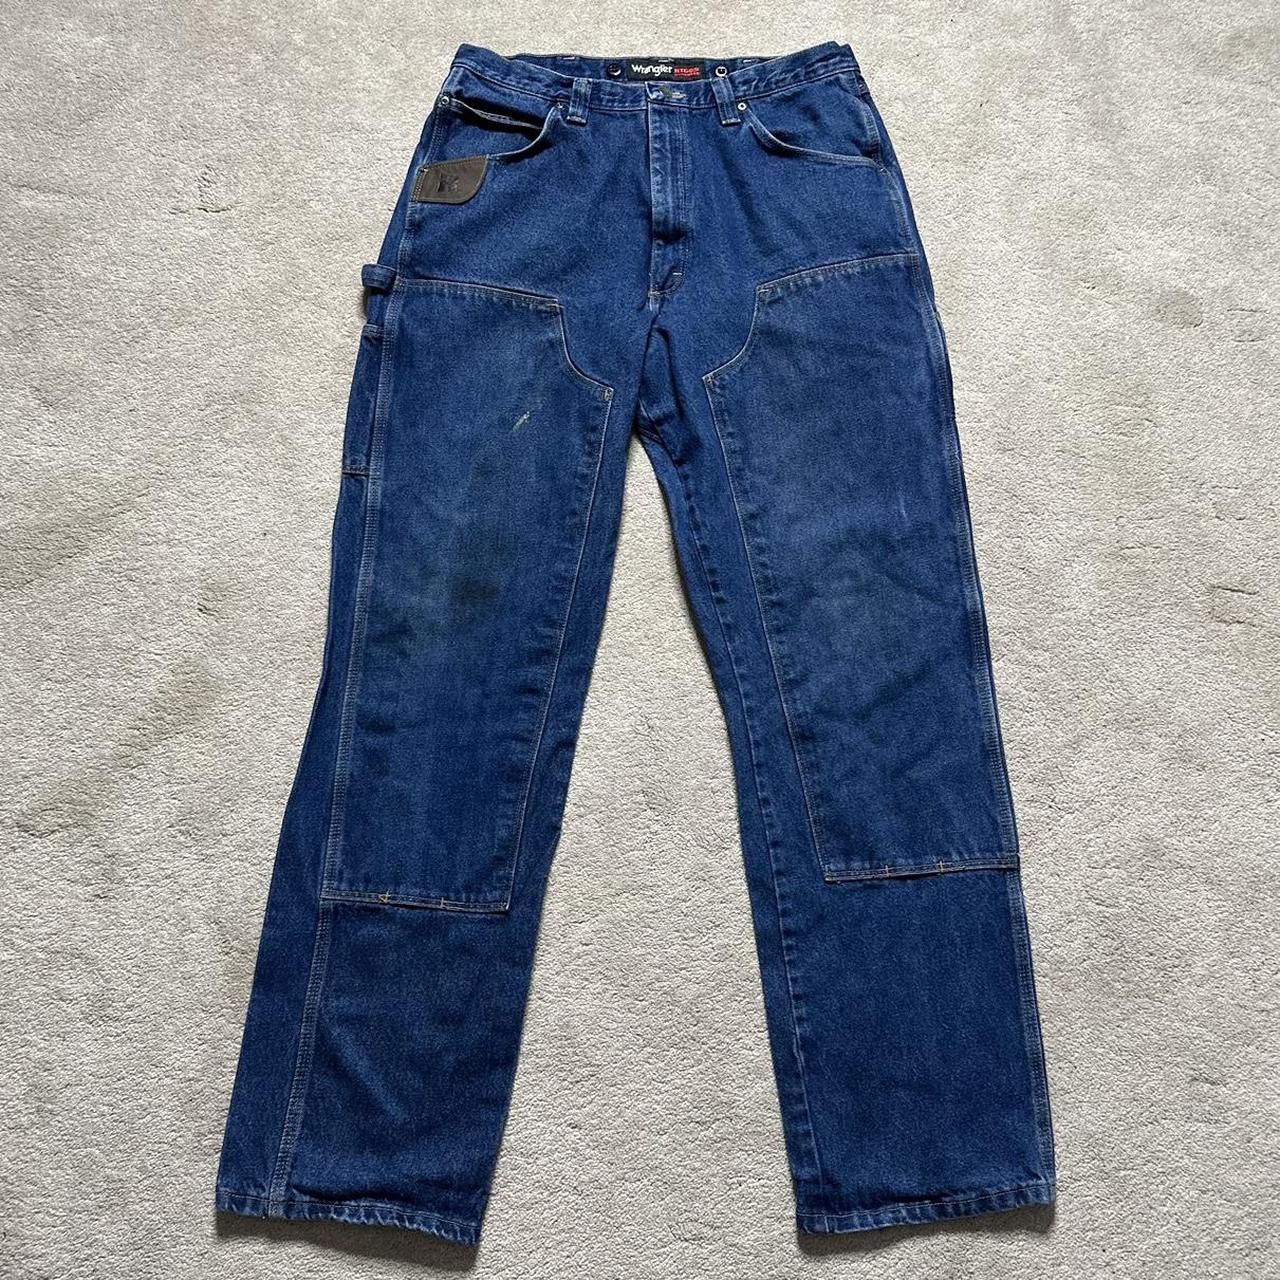 Blue Wrangler Riggs Workwear Double Knee Jeans 00s... - Depop